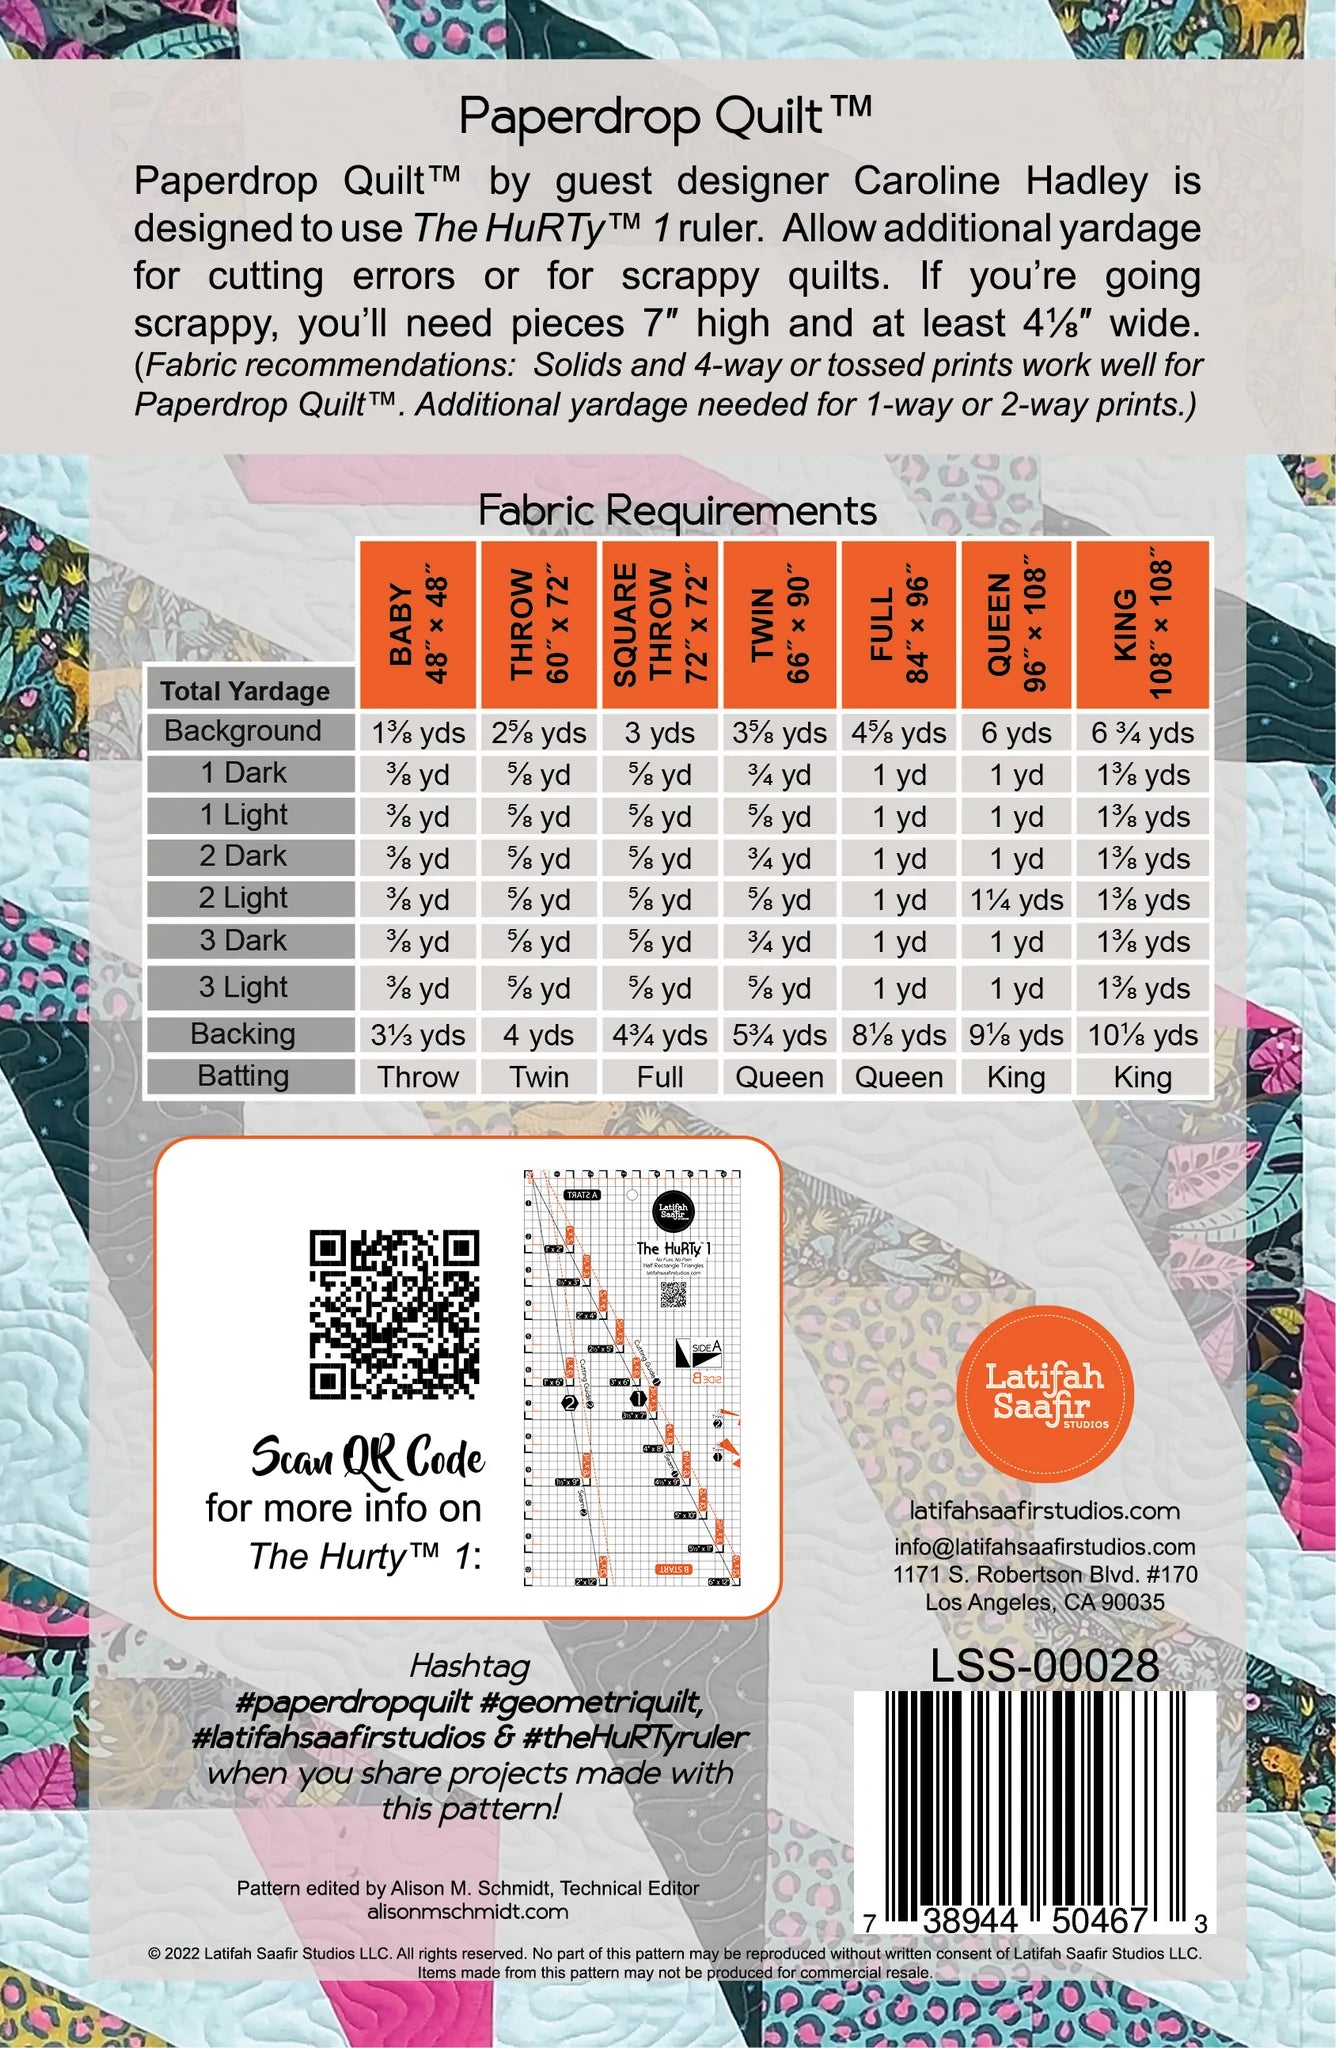 Paperdrop Quilt Pattern - Latifah Saafir and Caroline Hadley